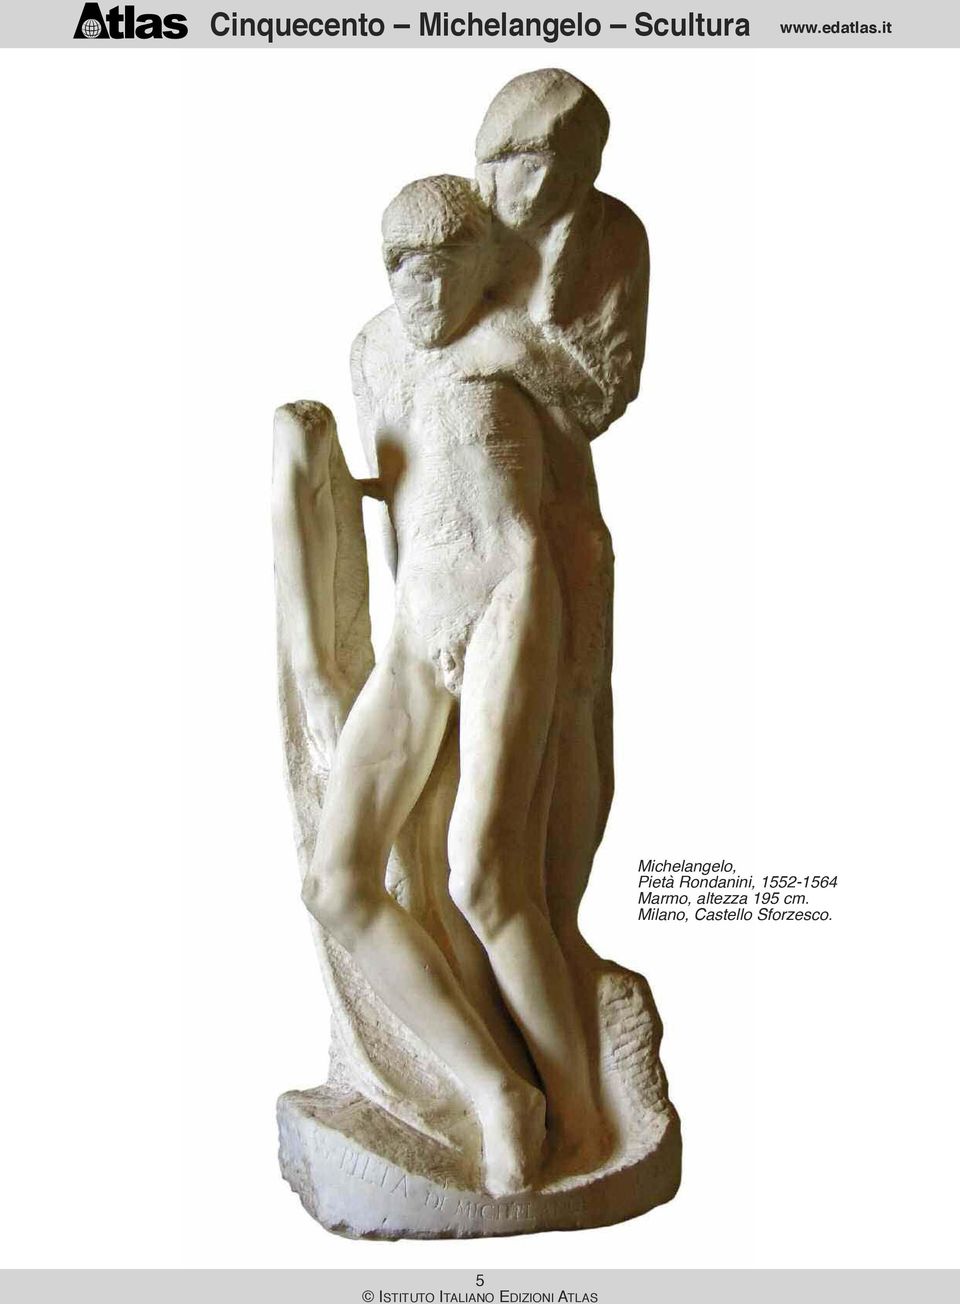 Rondanini, 1552-1564 Marmo,